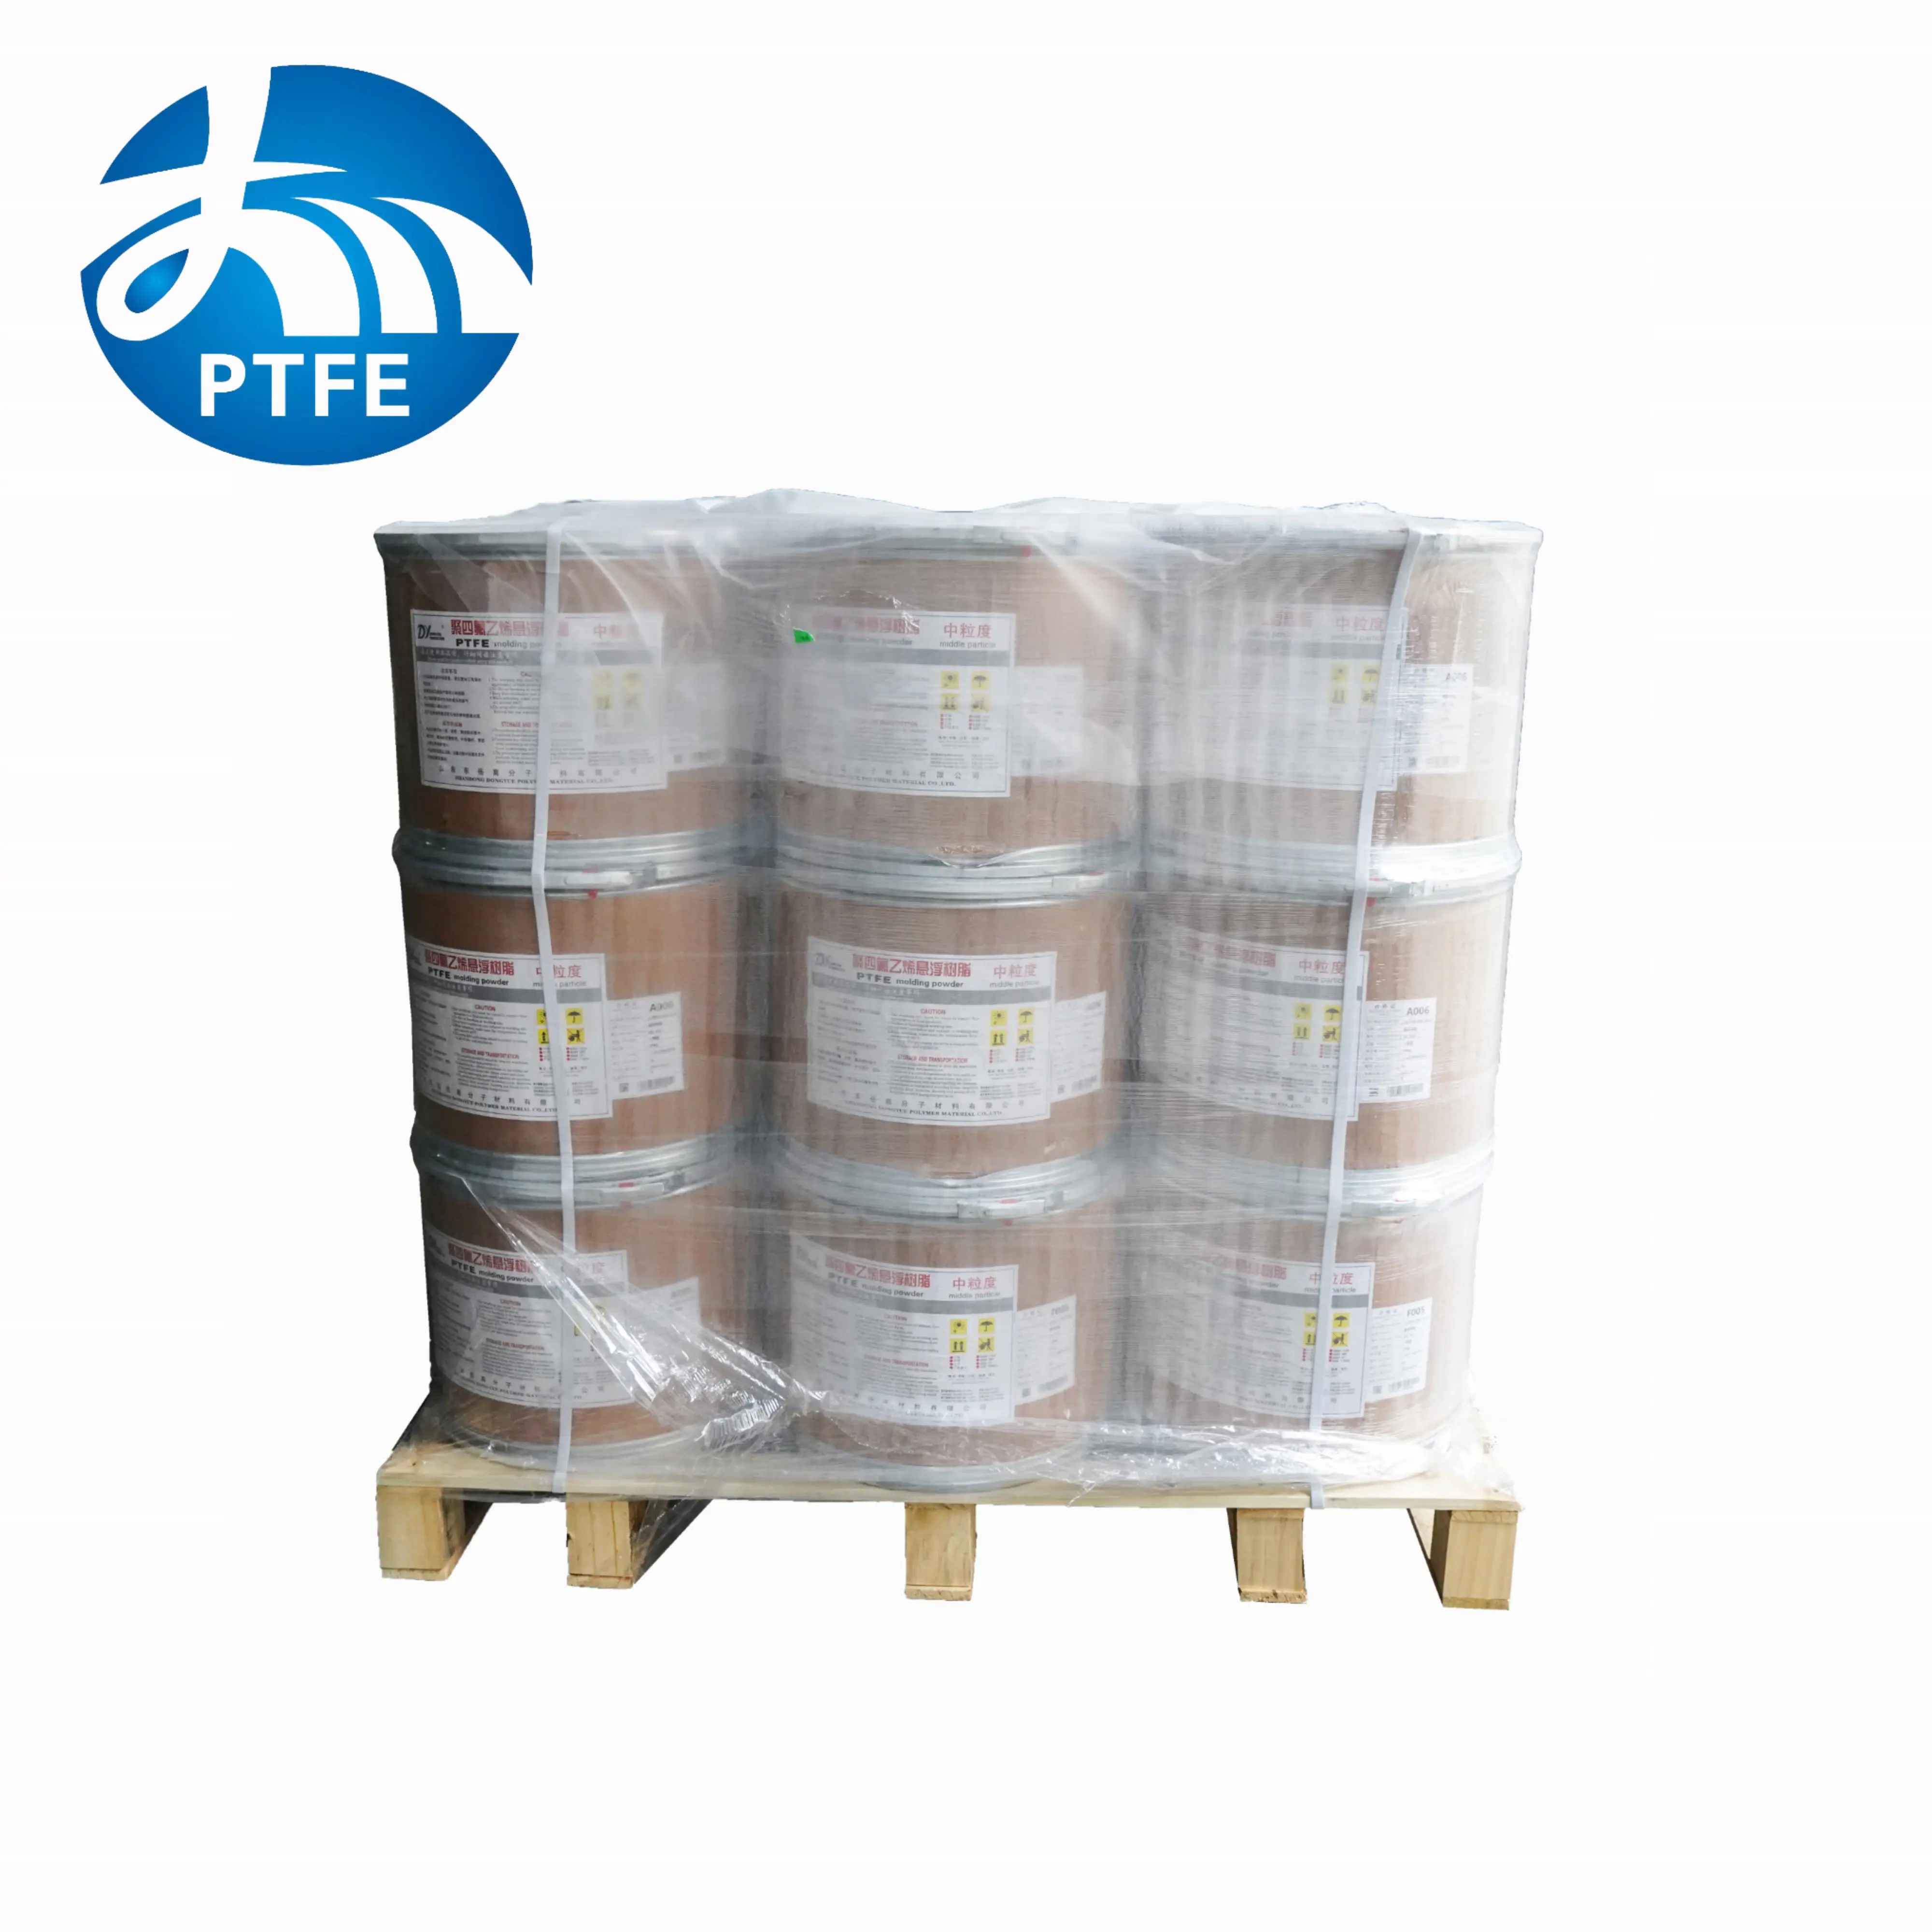 Bubuk resin Fluororesin PTFE kualitas tinggi untuk aplikasi tabung